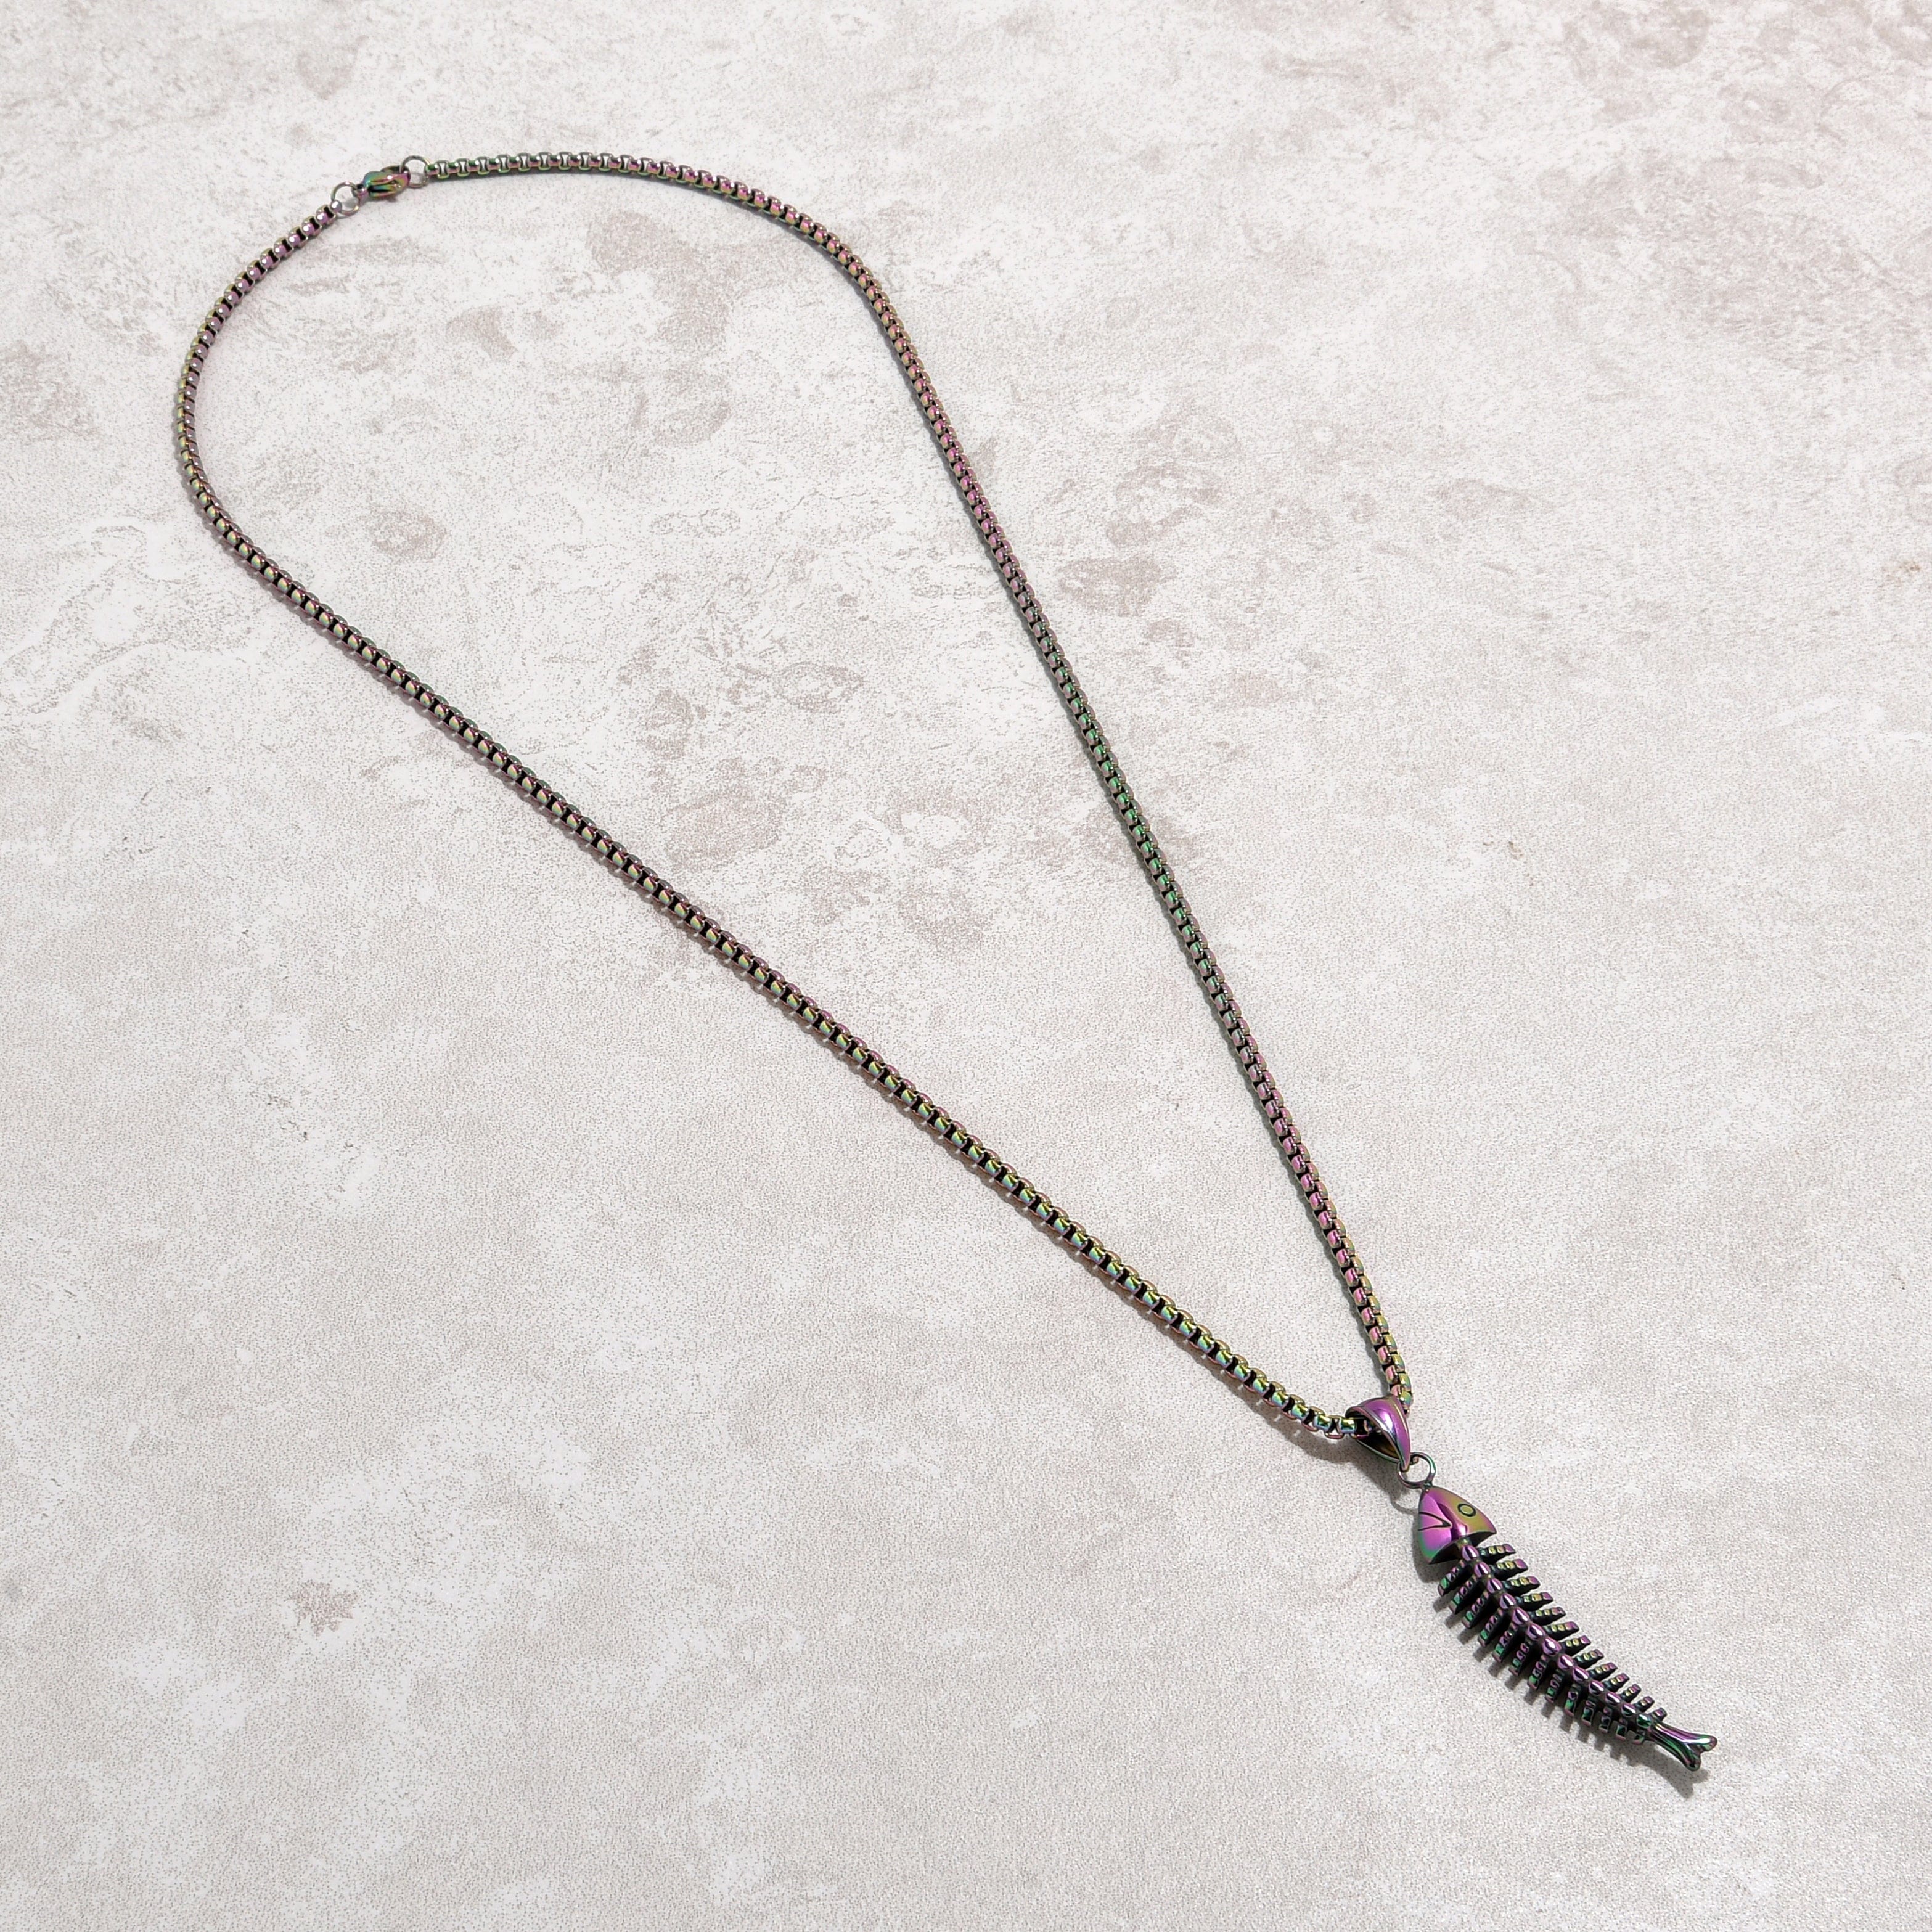 Kalifano Steel Hearts Jewelry Aurora Borealis Fish Bone Steel Hearts Necklace SHN500-AB